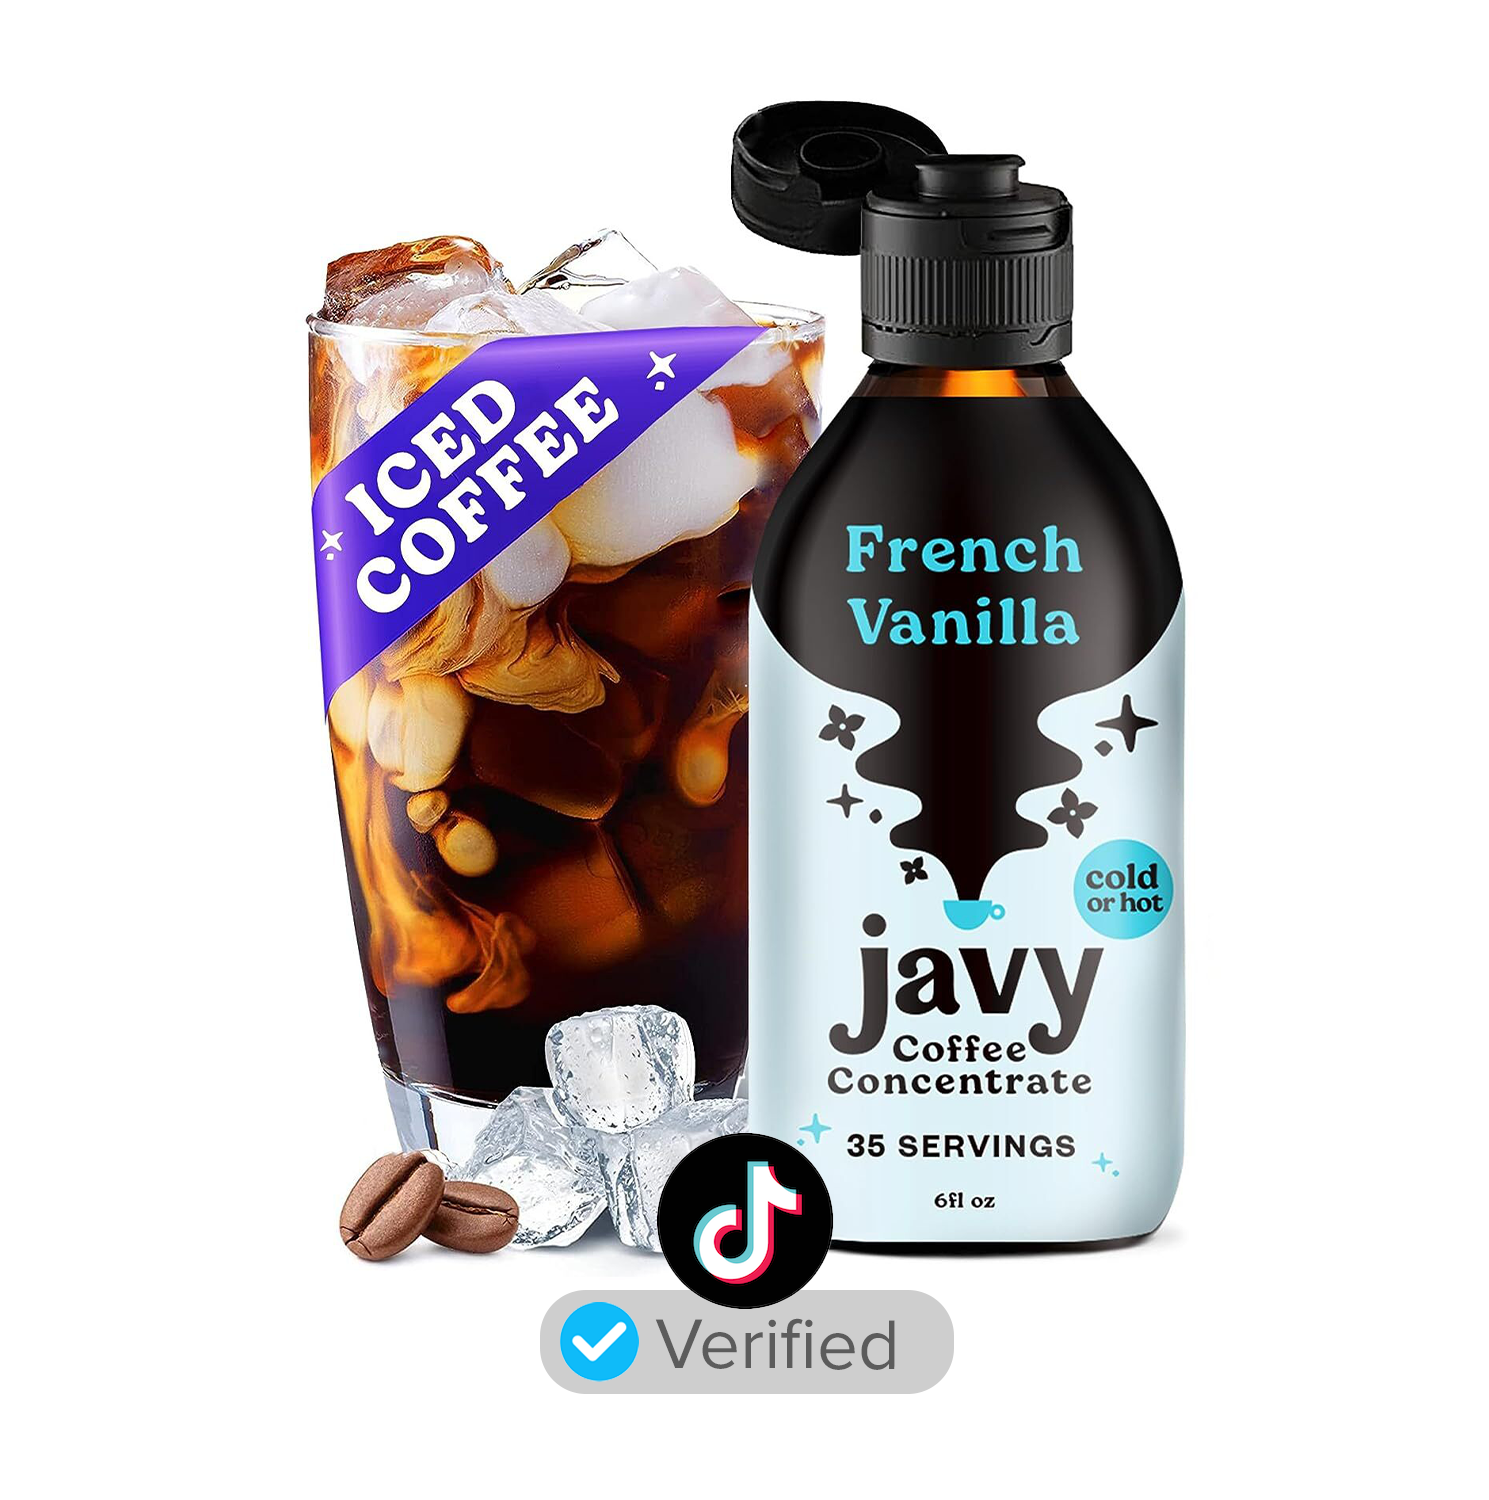 Javy Coffee Company